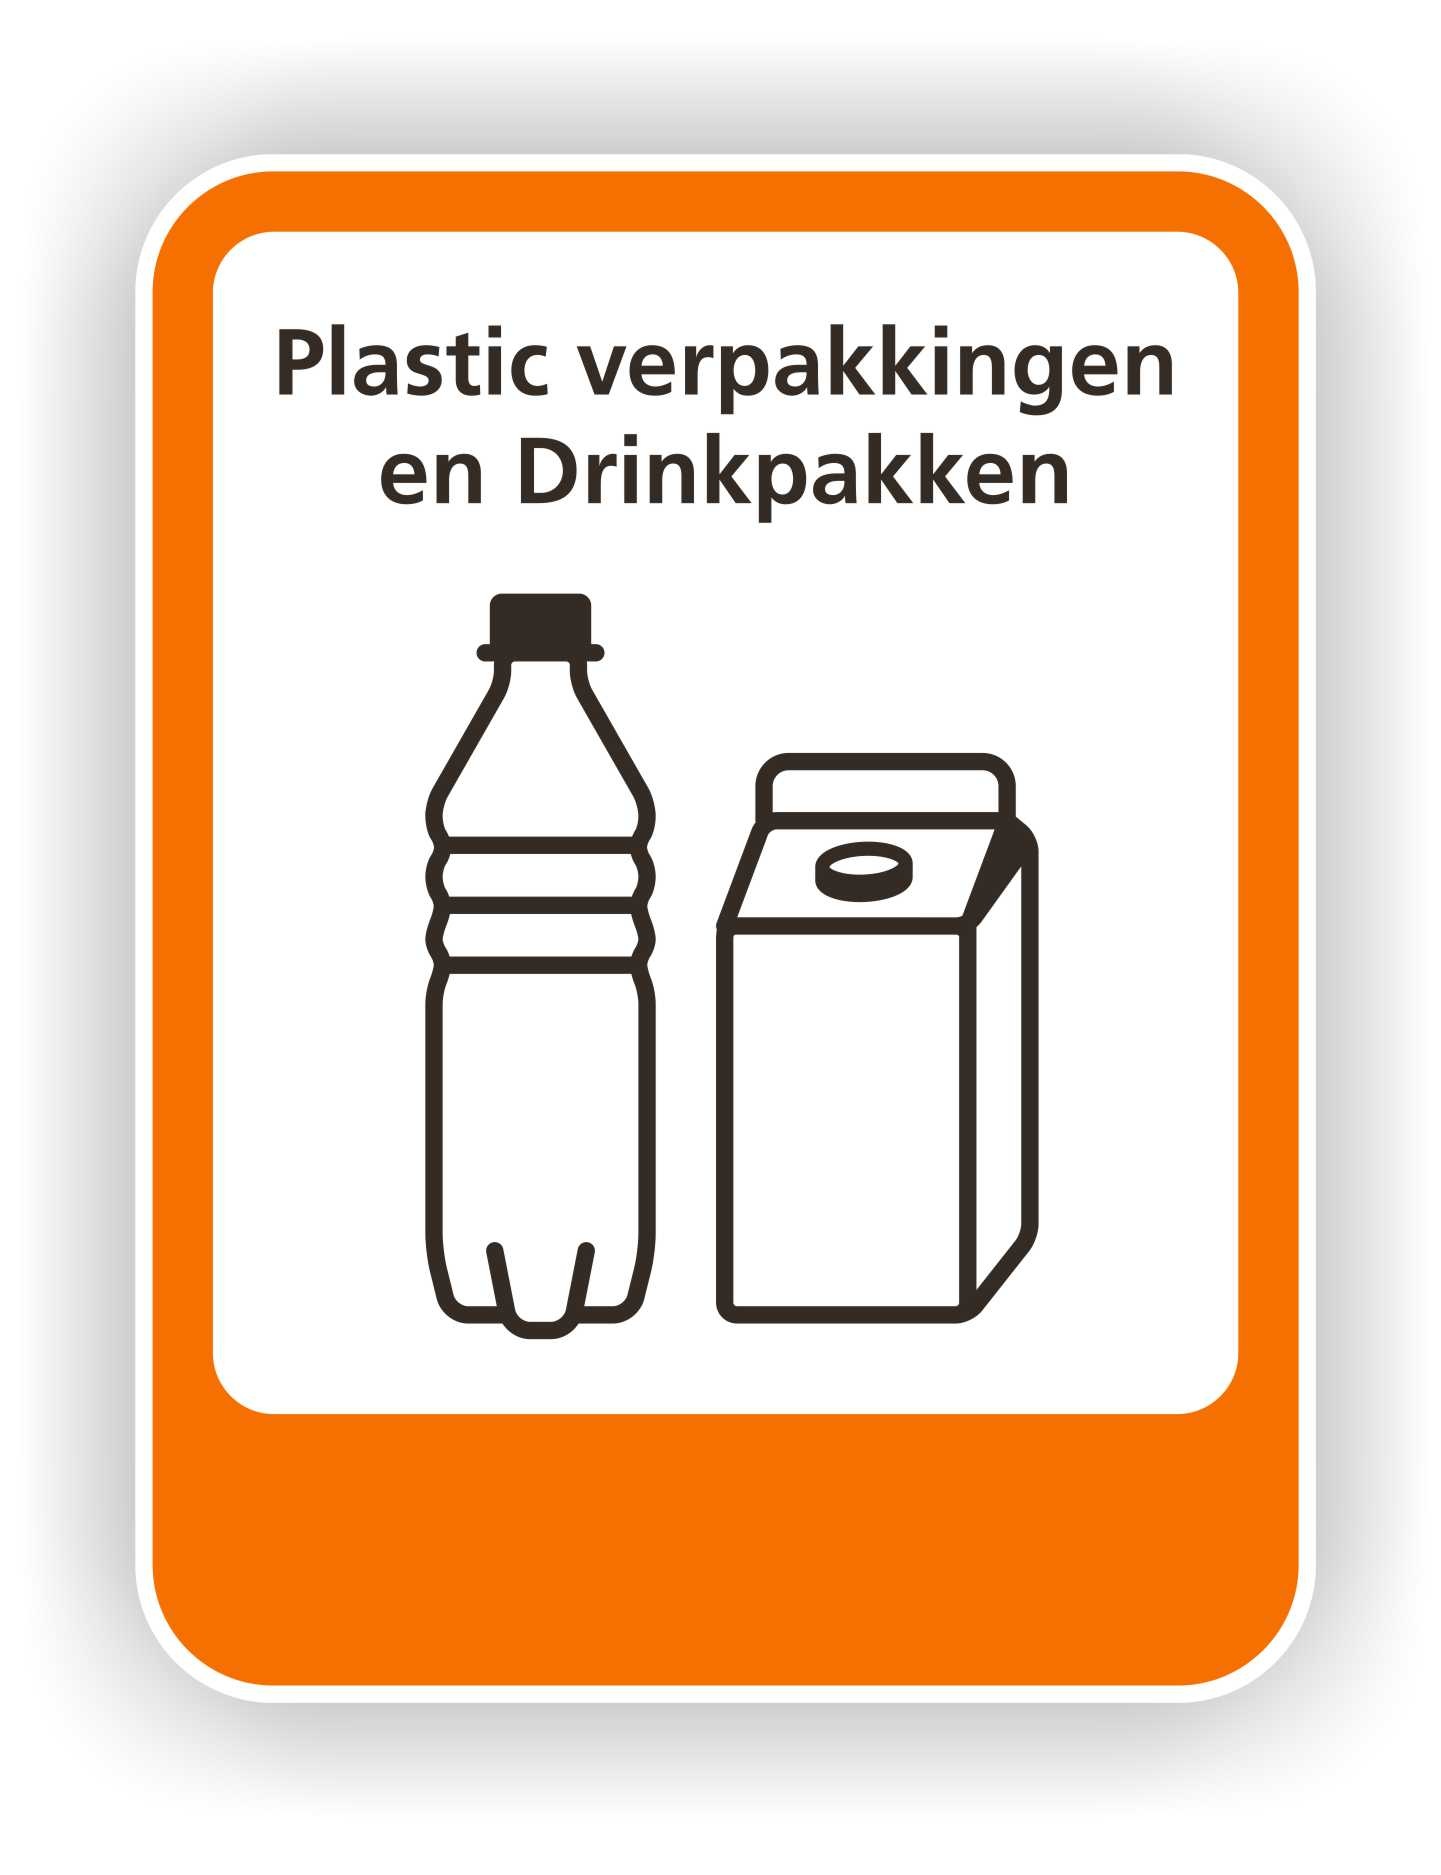 Plastic en drinkpakken recycling - AllerhandeStickers